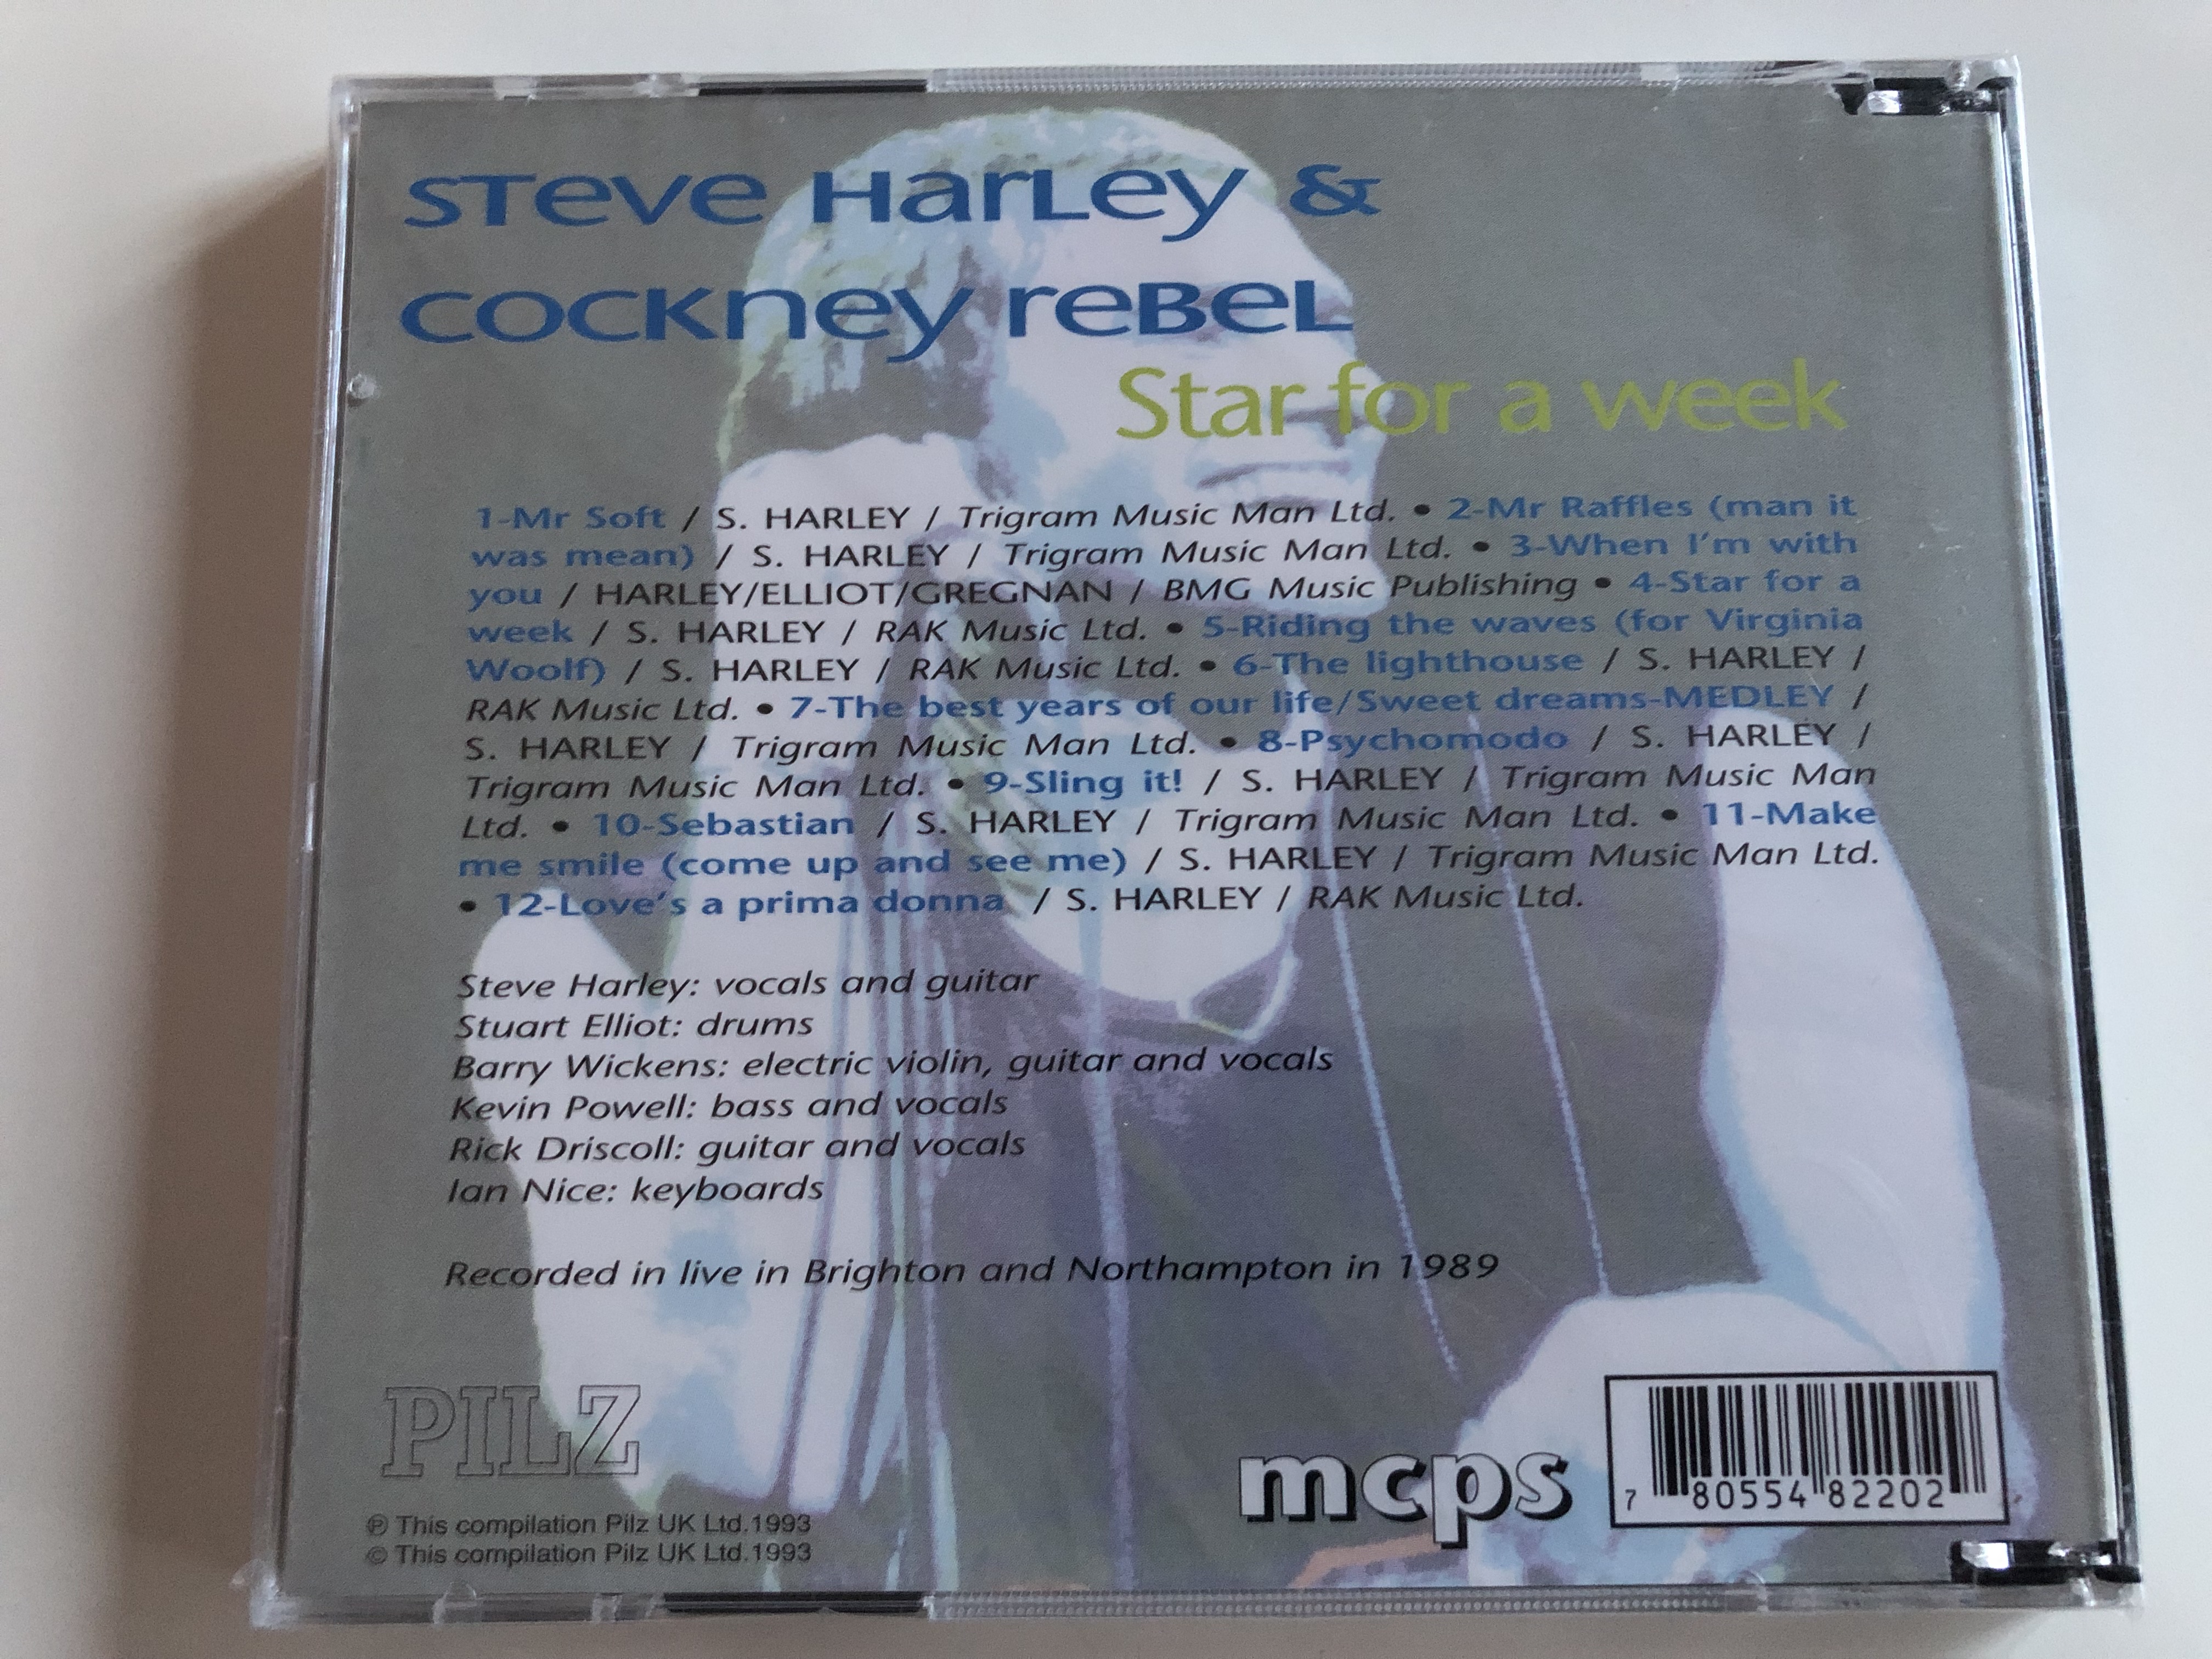 steve-harley-cockney-rebel-star-for-a-week-mr.-soft-mr.-raffles-when-i-m-with-you-riding-the-waves-sling-it-make-me-smile-audio-cd-1993-2-.jpg